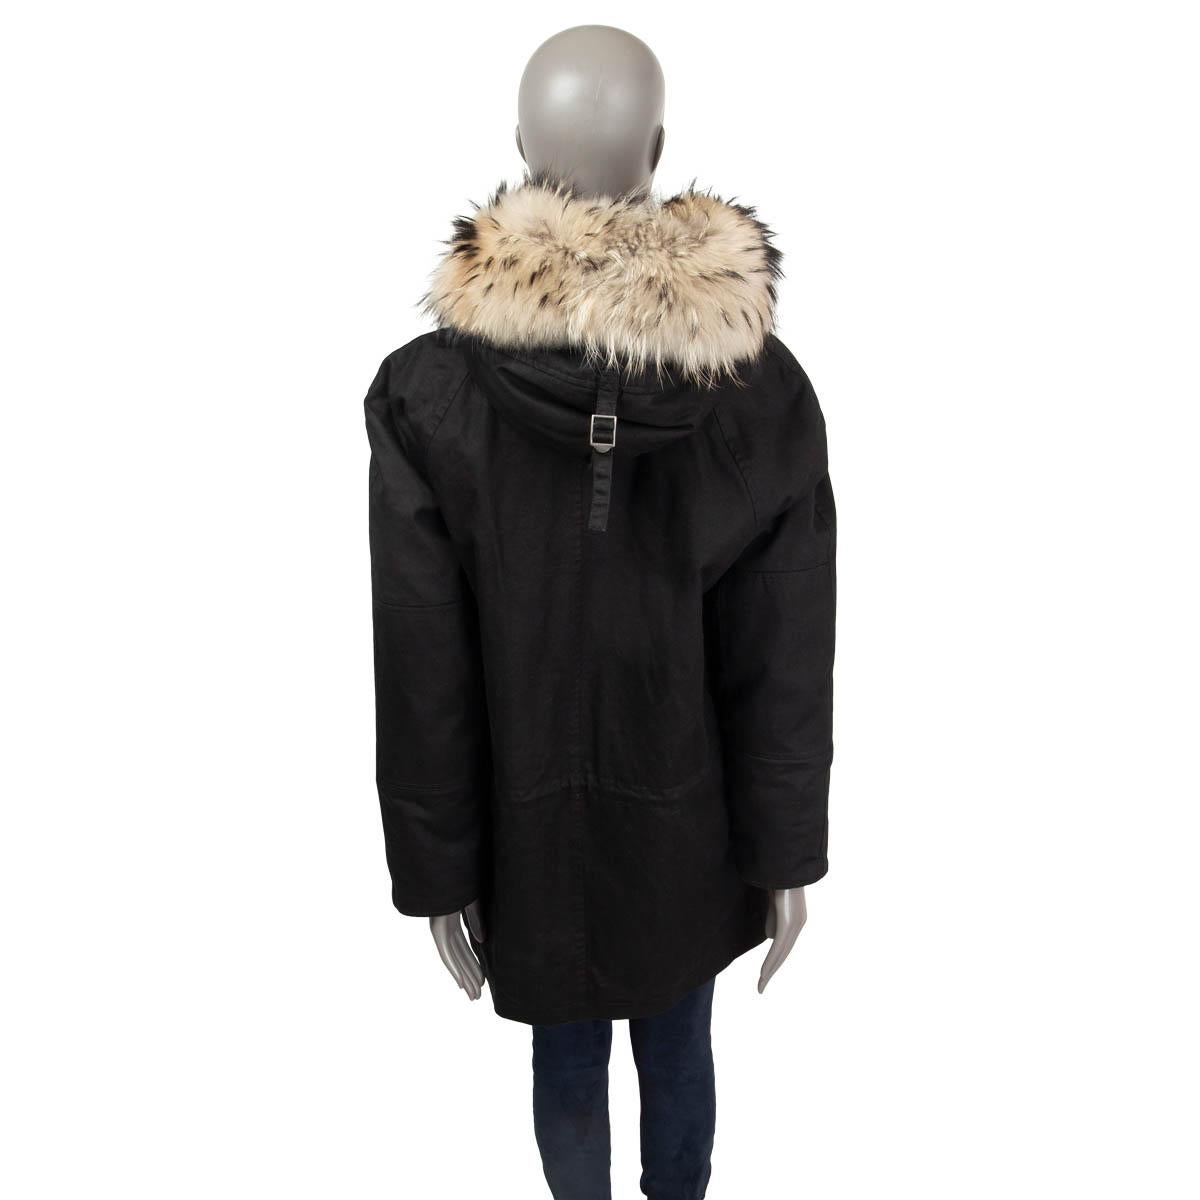 SAINT LAURENT black cotton FUR LINED HOODED Parka Coat Jacket 36 XS In Excellent Condition For Sale In Zürich, CH